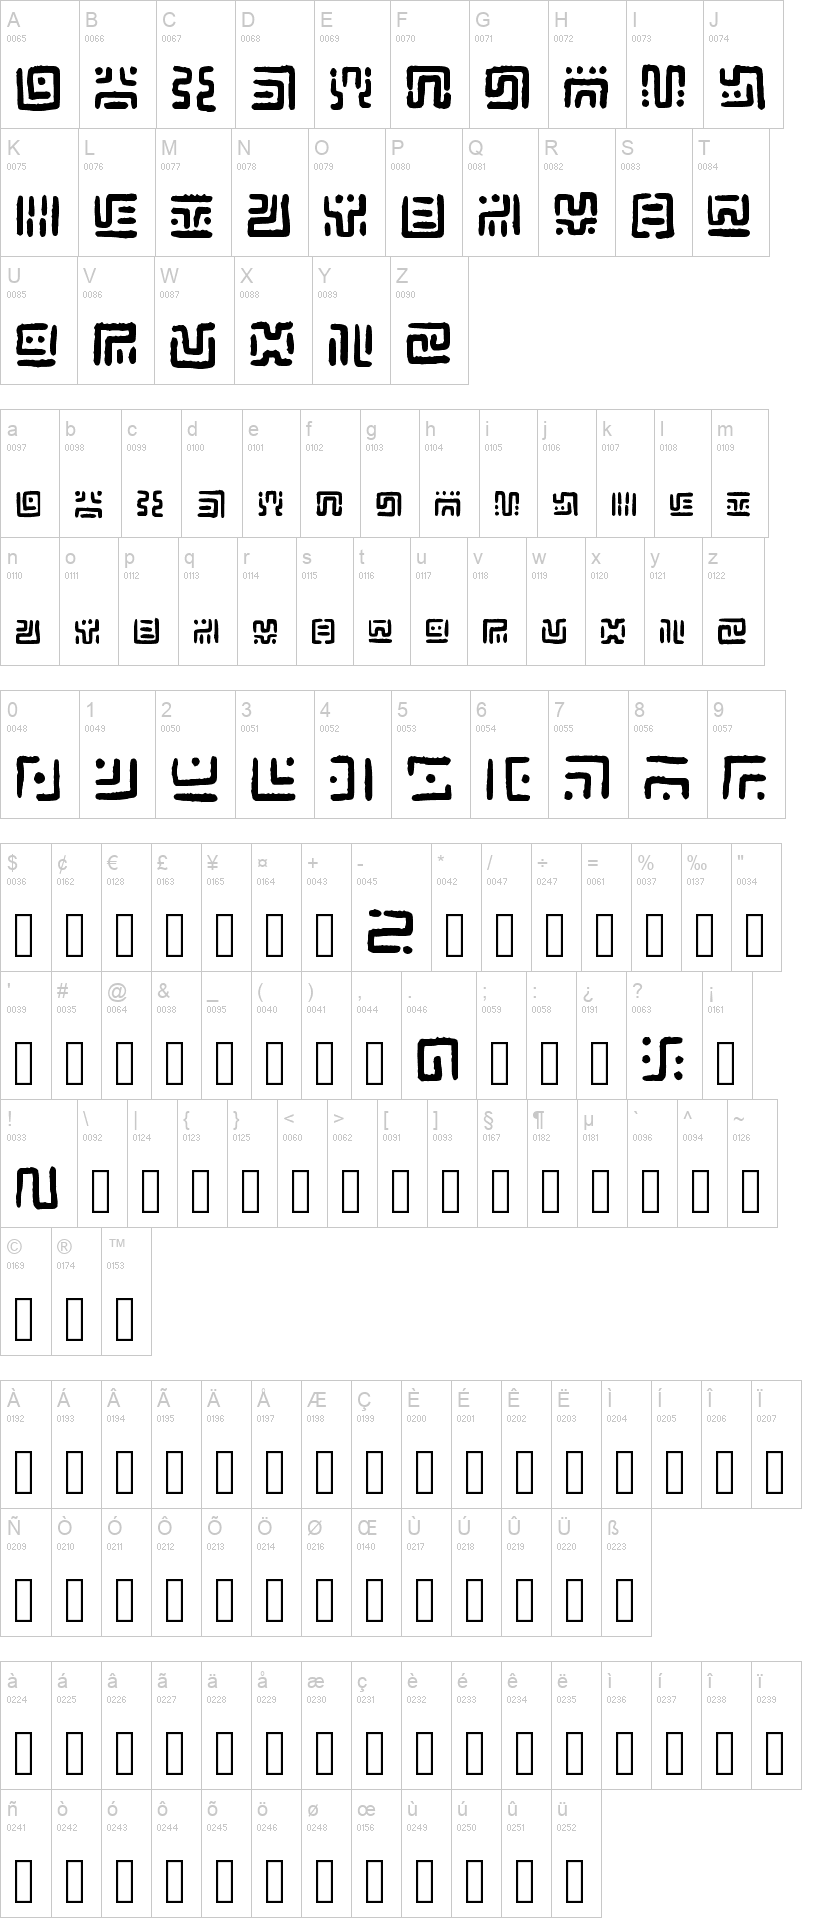 Handwritten Sheikah Runes